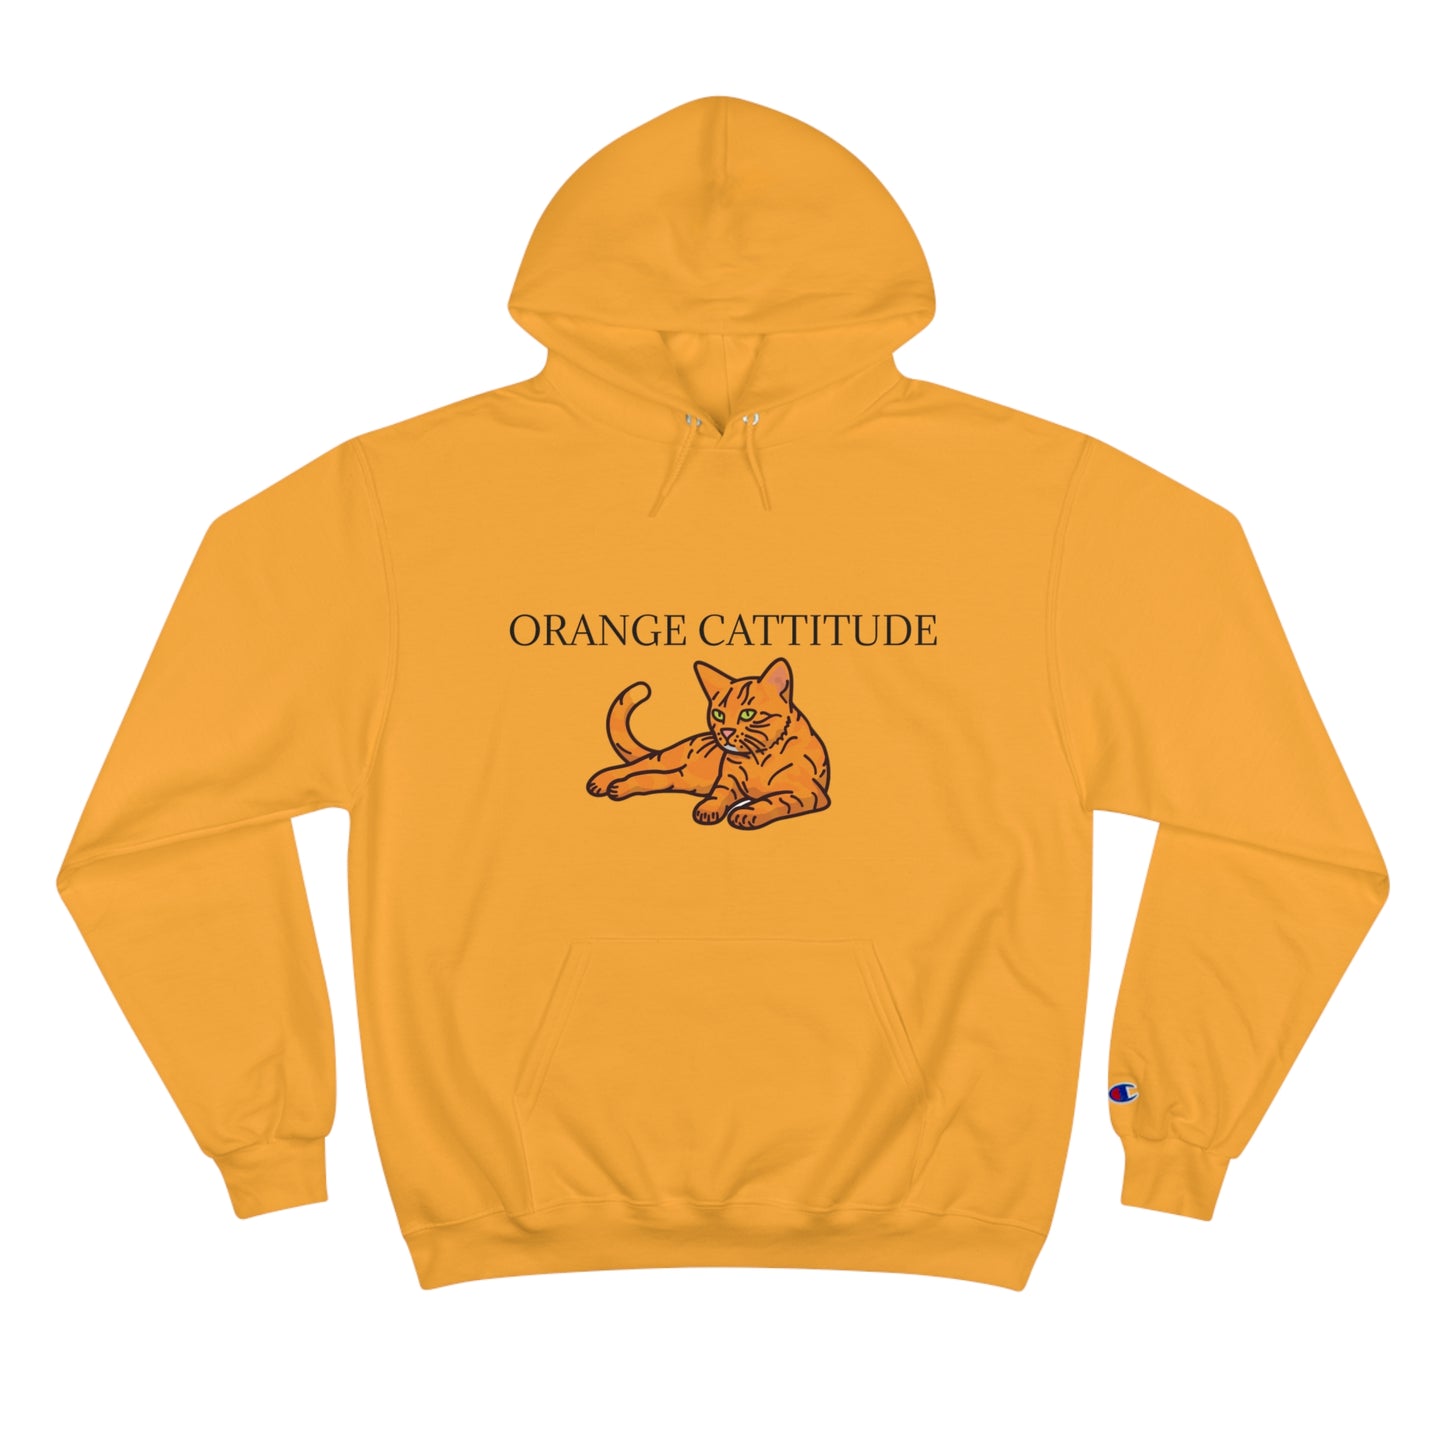 "Orange Cattitude" Champion Hoodie